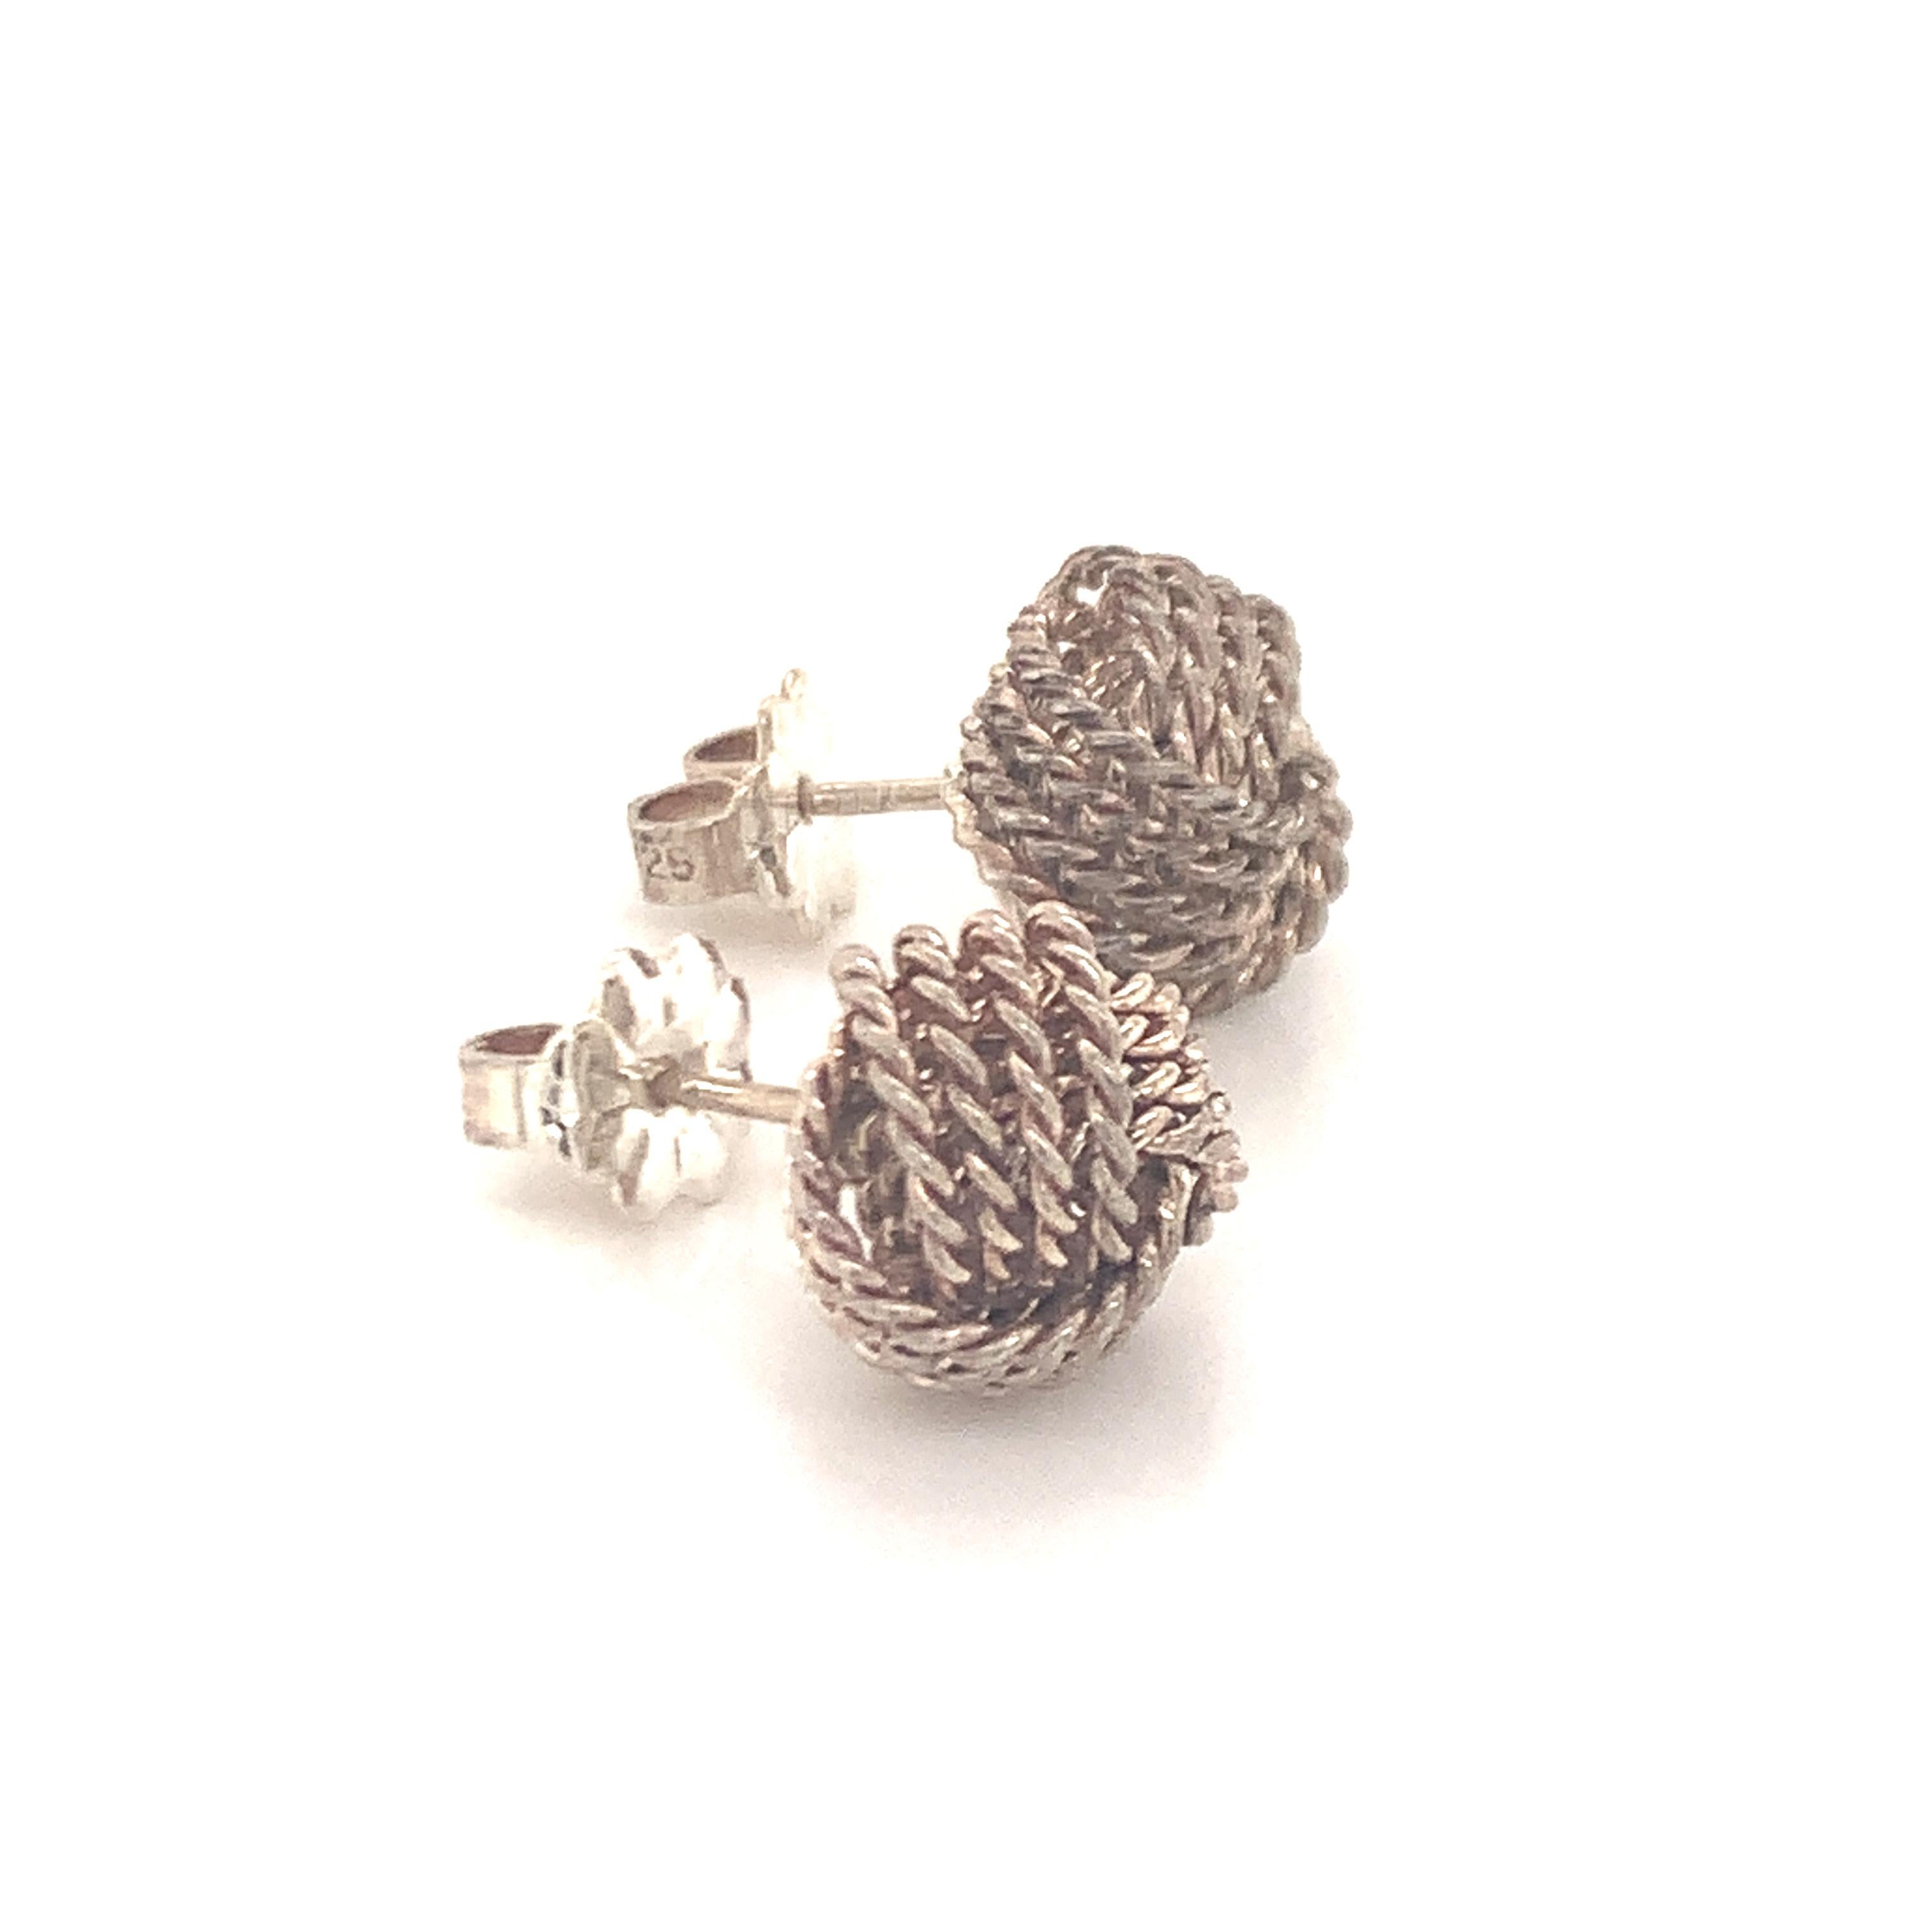 Tiffany & Co. Estate Sterling Silver Love Knot Earrings 2.8 Grams 1